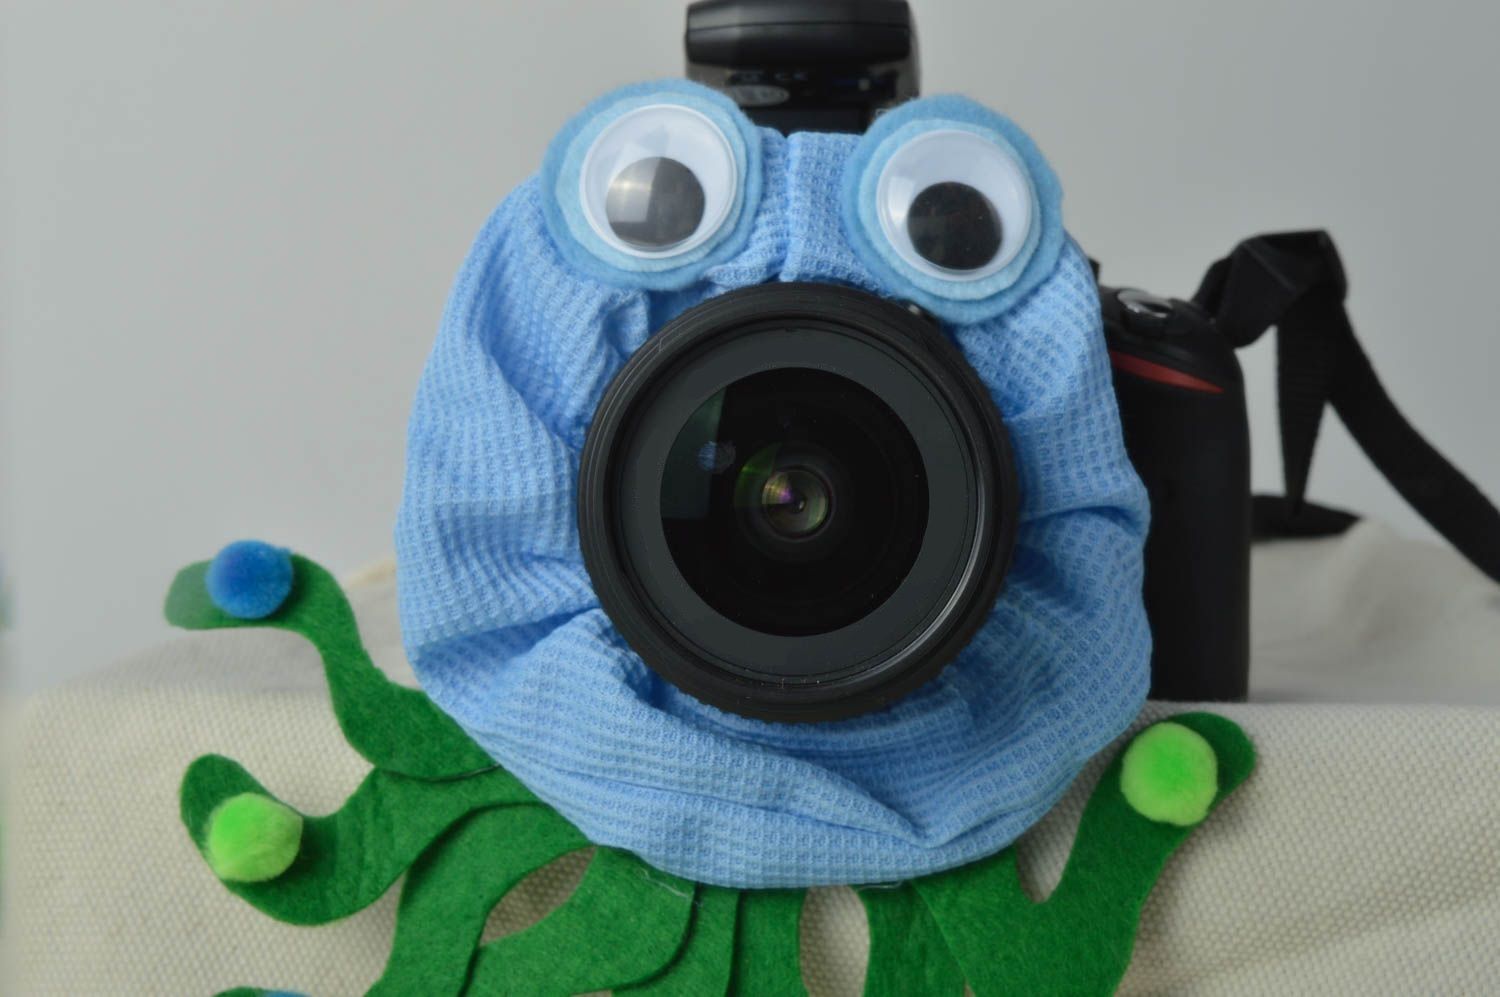 Handmade Krake Spielzeug Kamera Accessoire Fotokamera Zubehör lustig originell foto 1